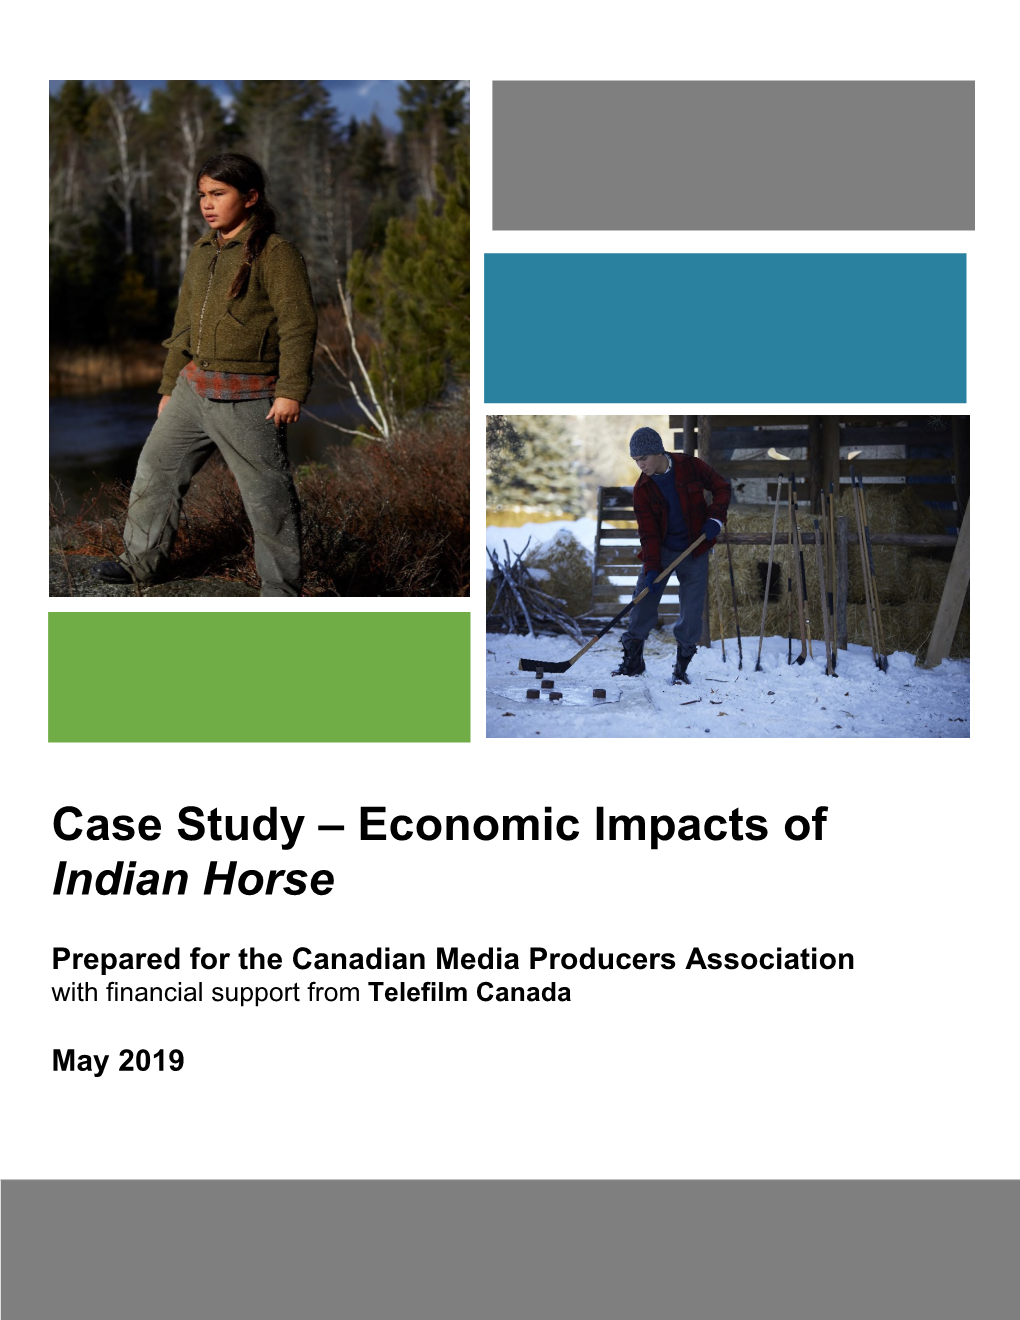 Economic Impacts of Indian Horse